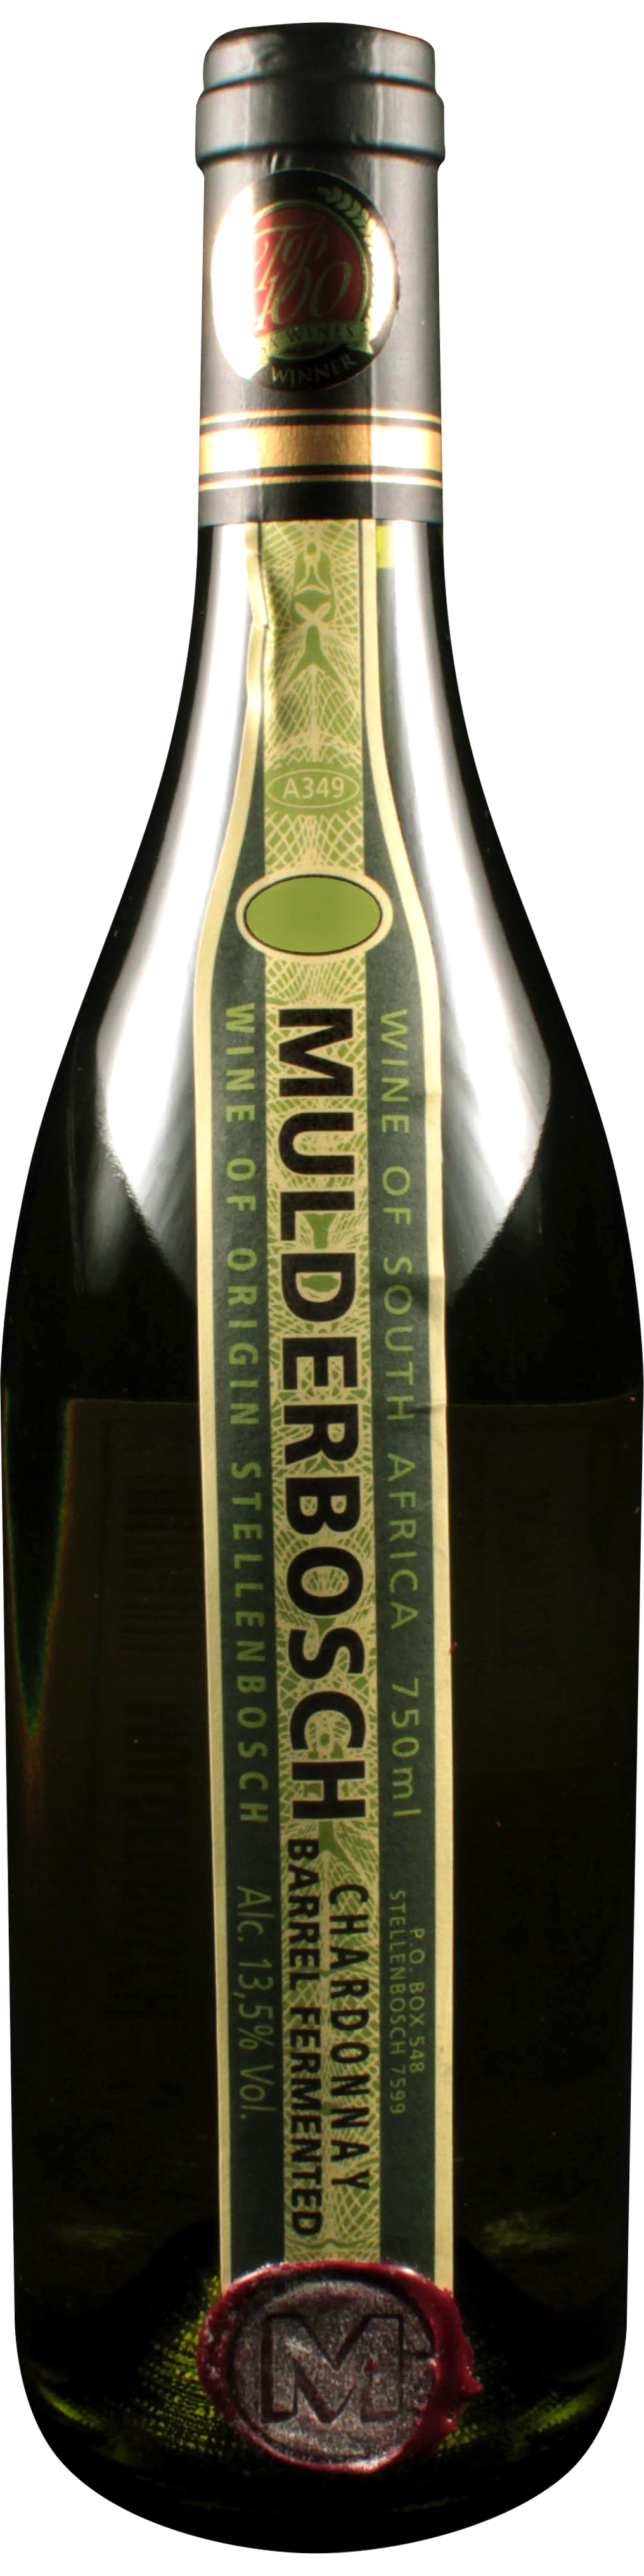 Bottle shot of 2007 Barrel Fermented Chardonnay